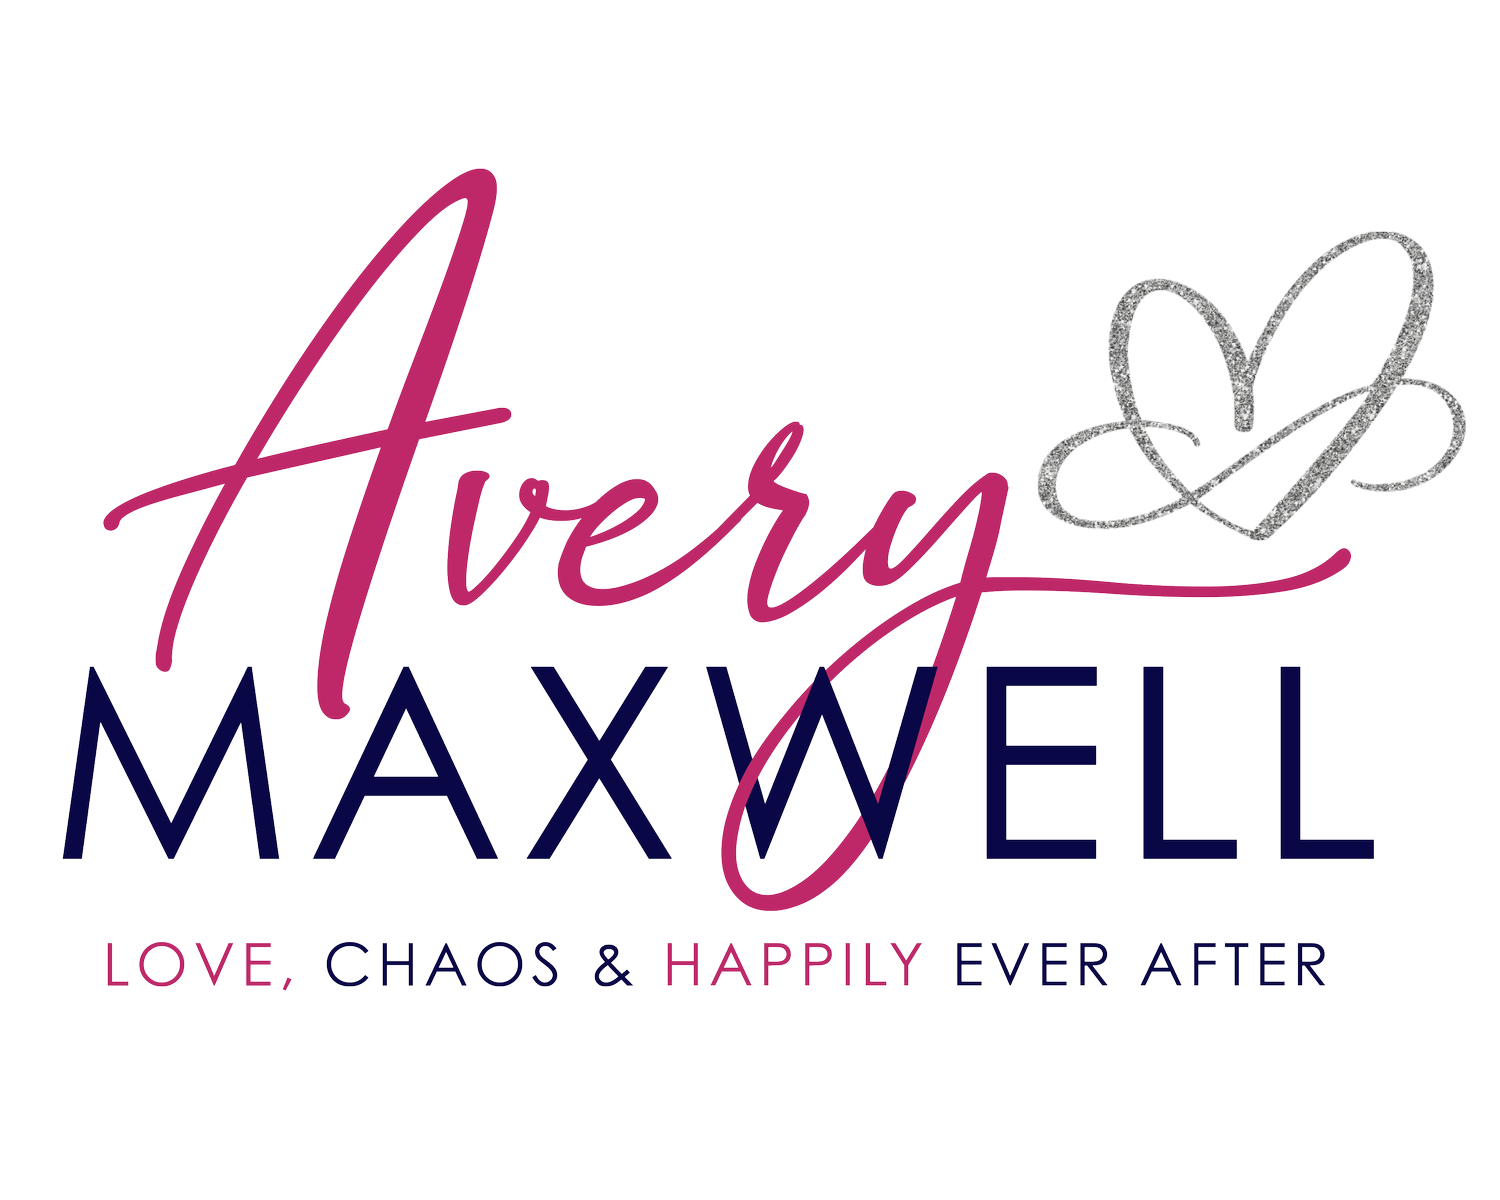 Avery Maxwell Books